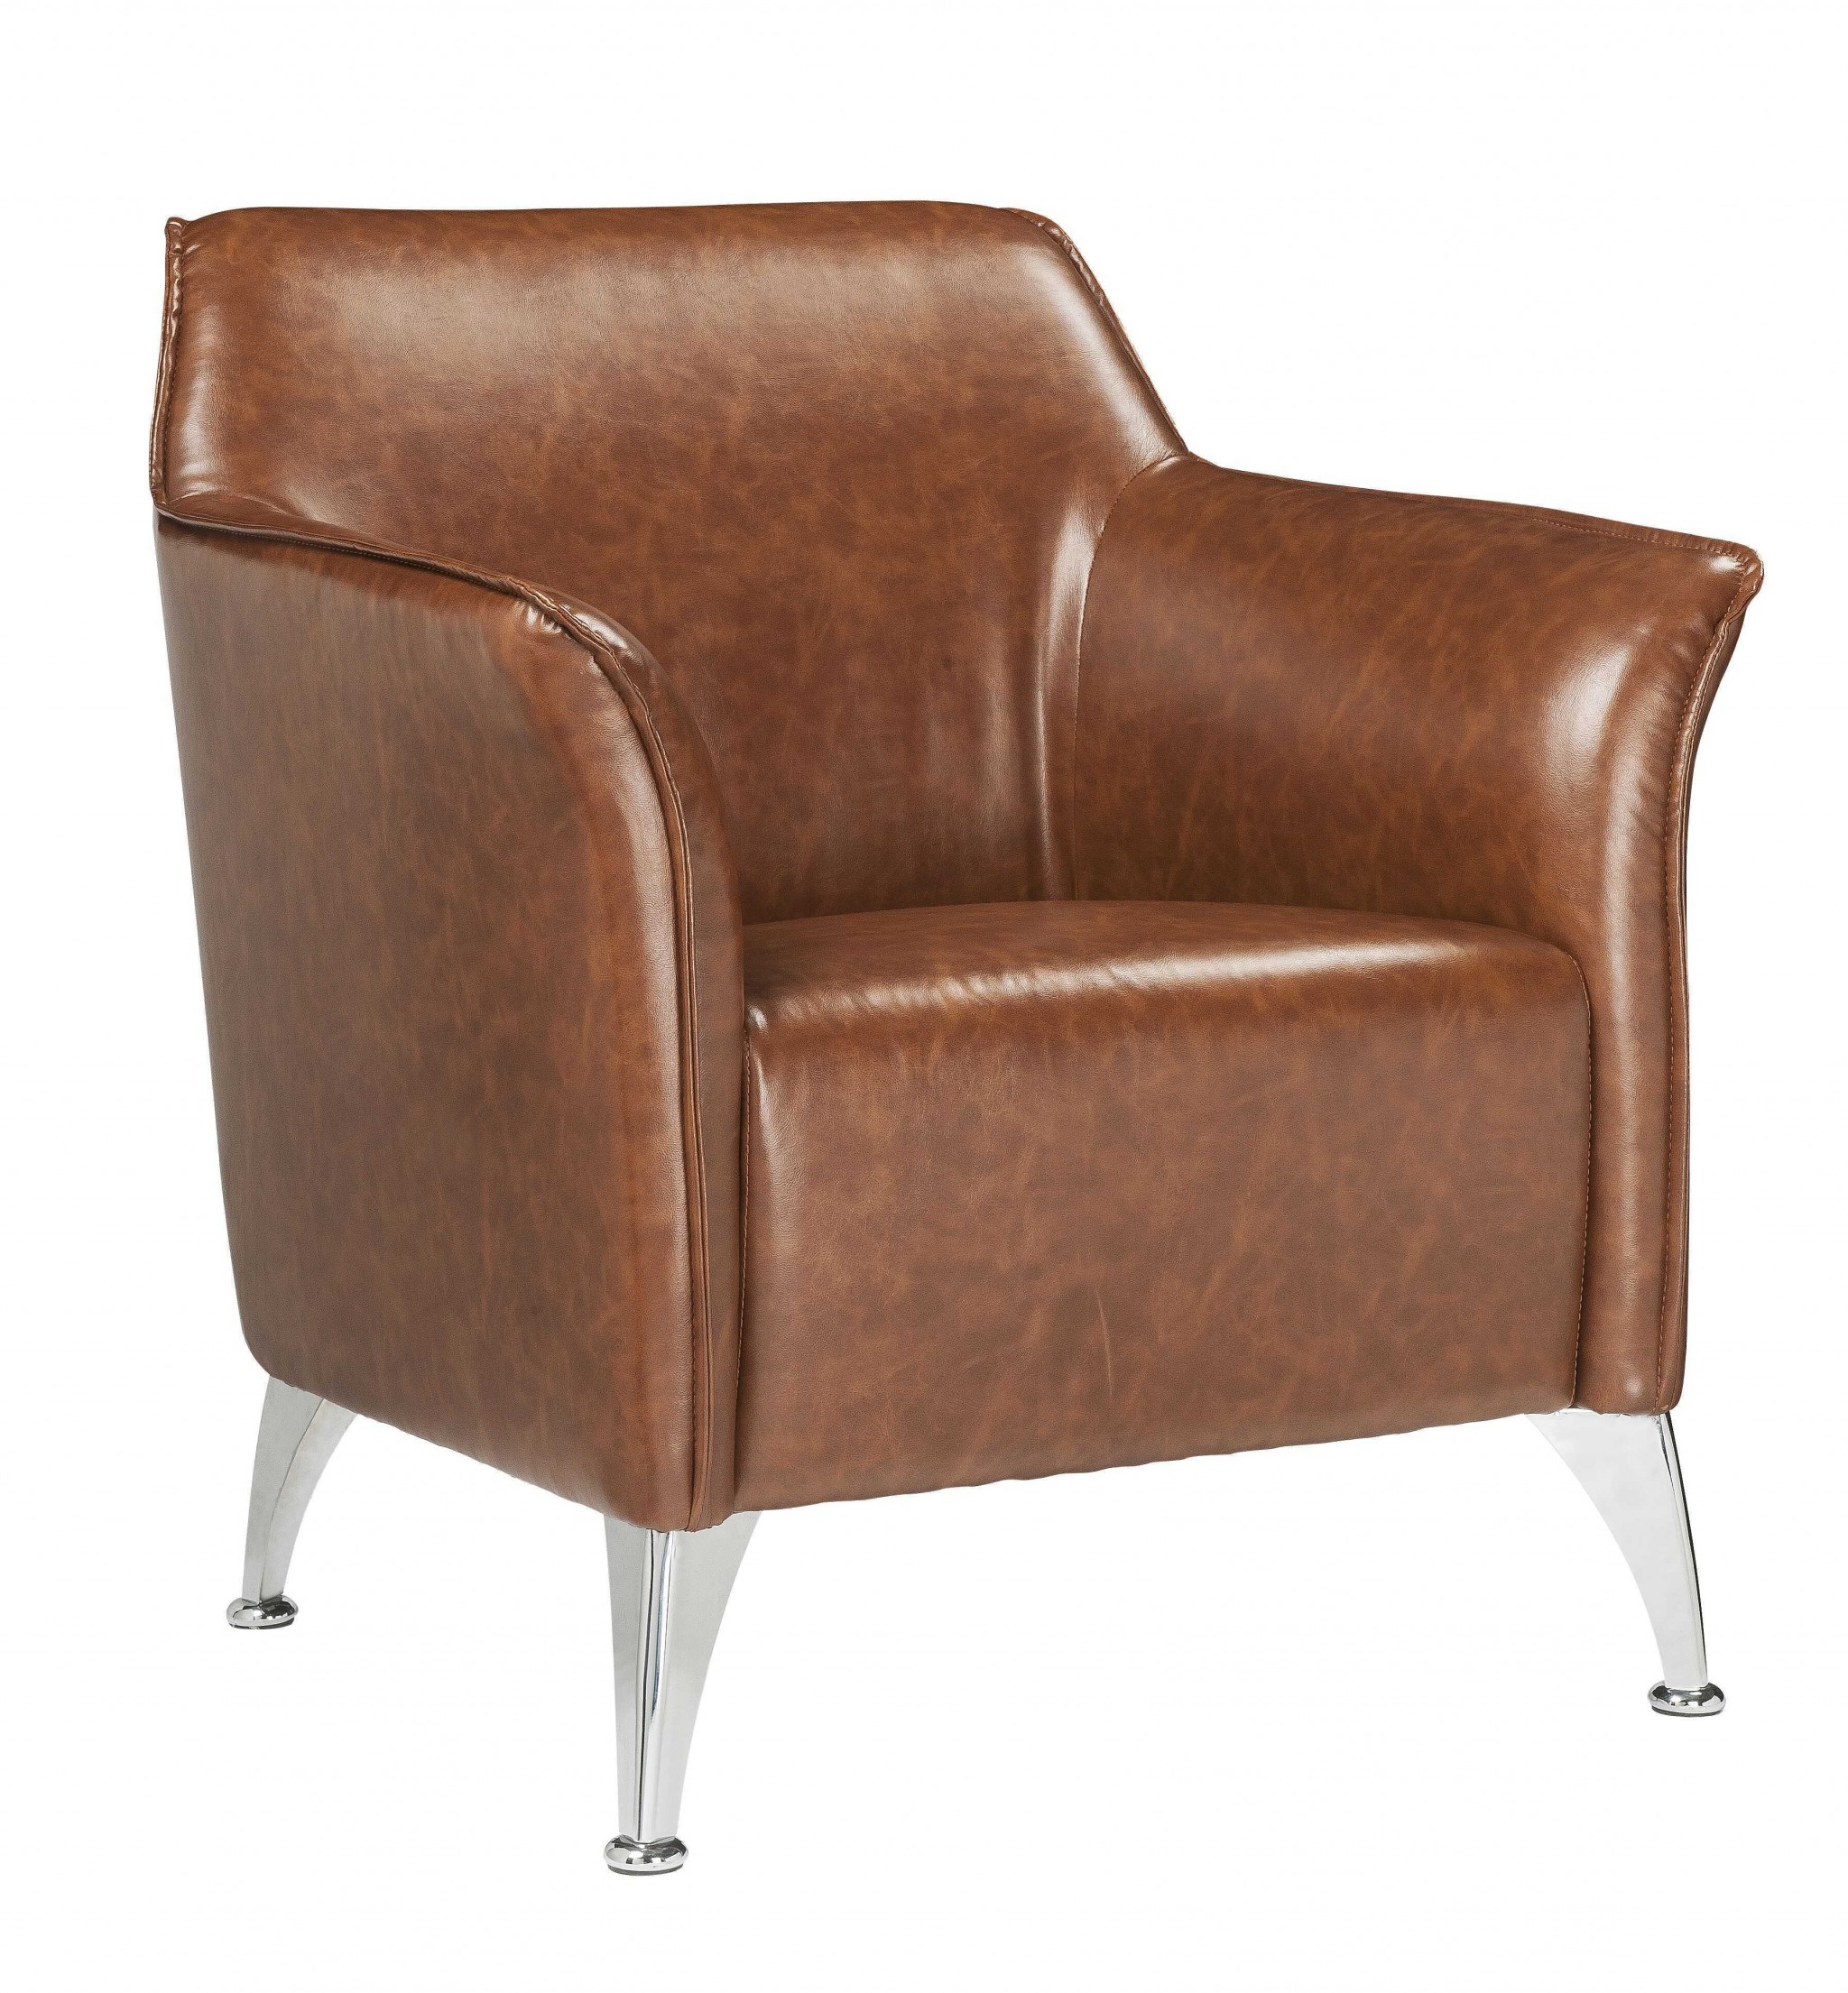 31" X 33" X 33" Brown PU Upholstery Metal Leg Accent Chair